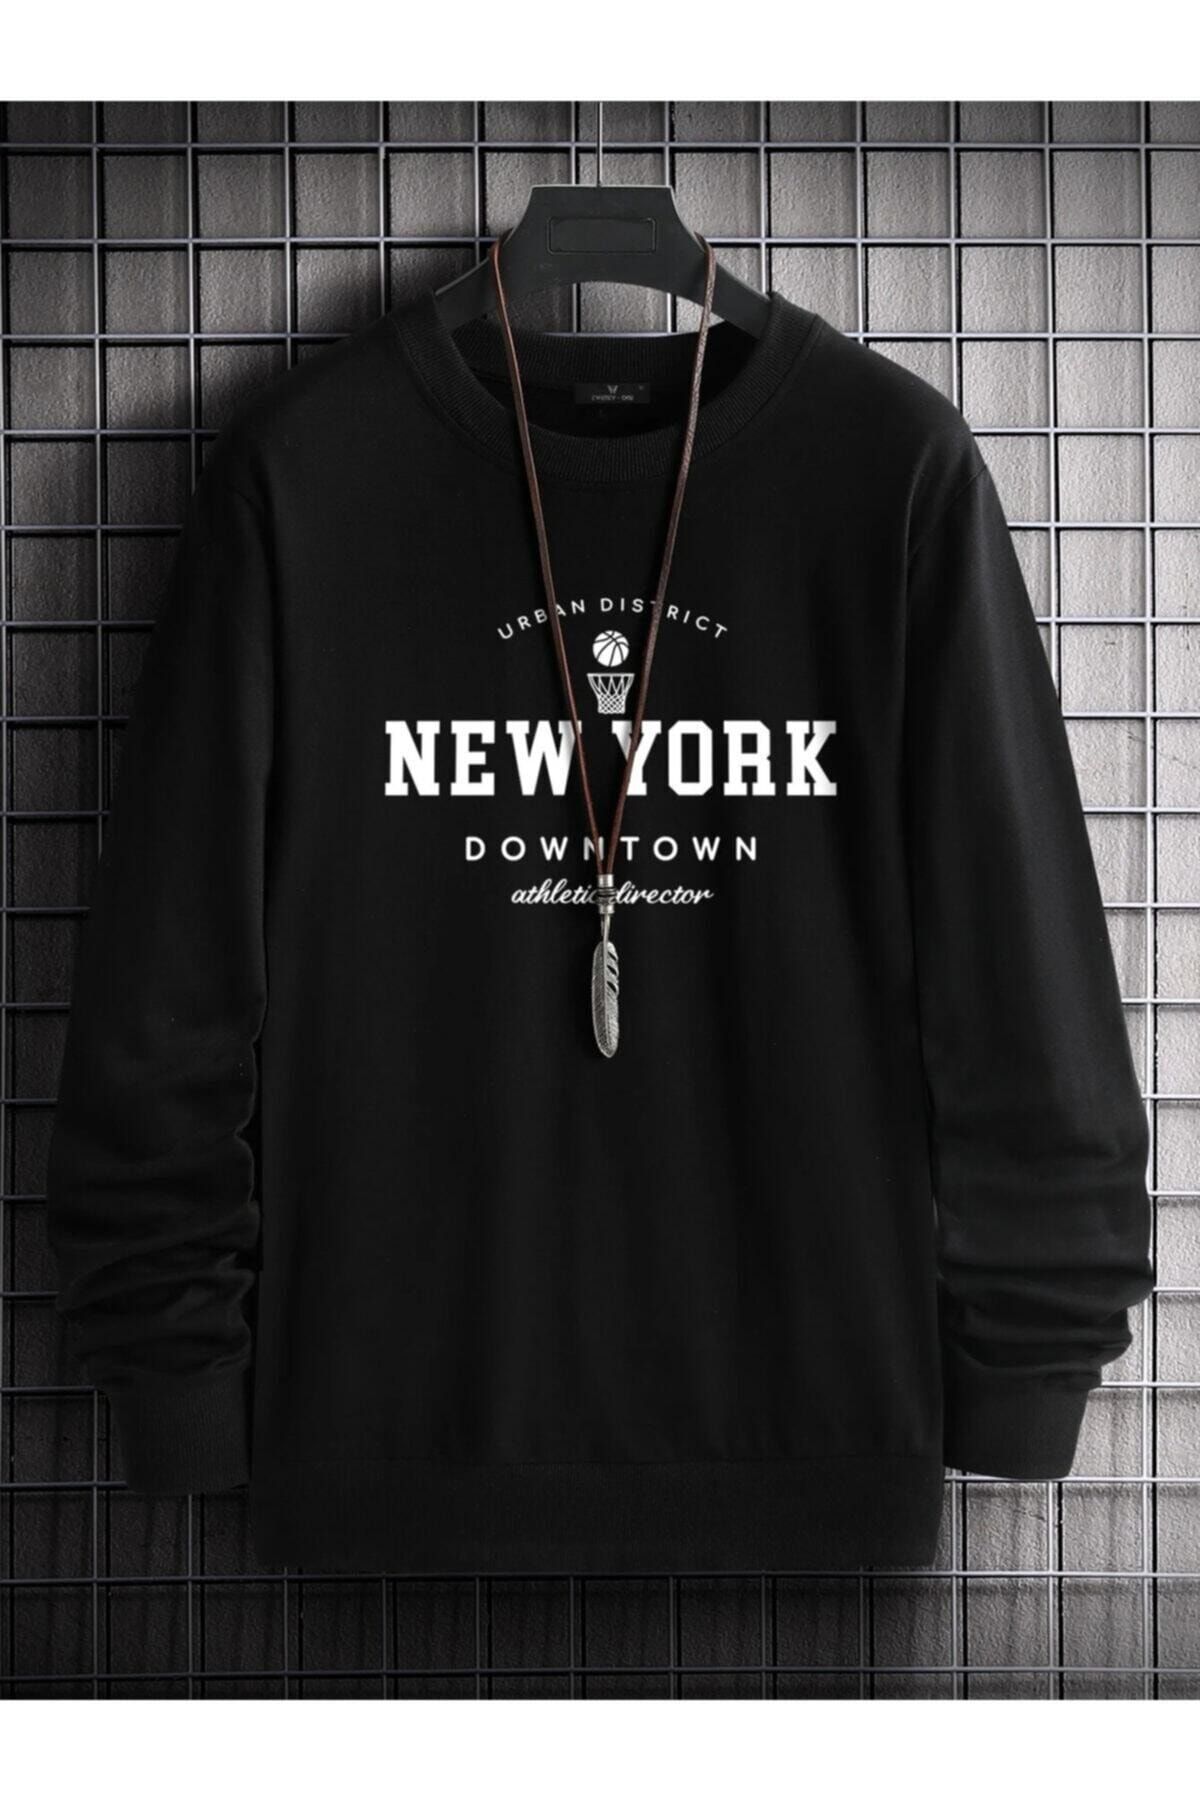 Black New York Downtown Graphic Printed Sweatshirt